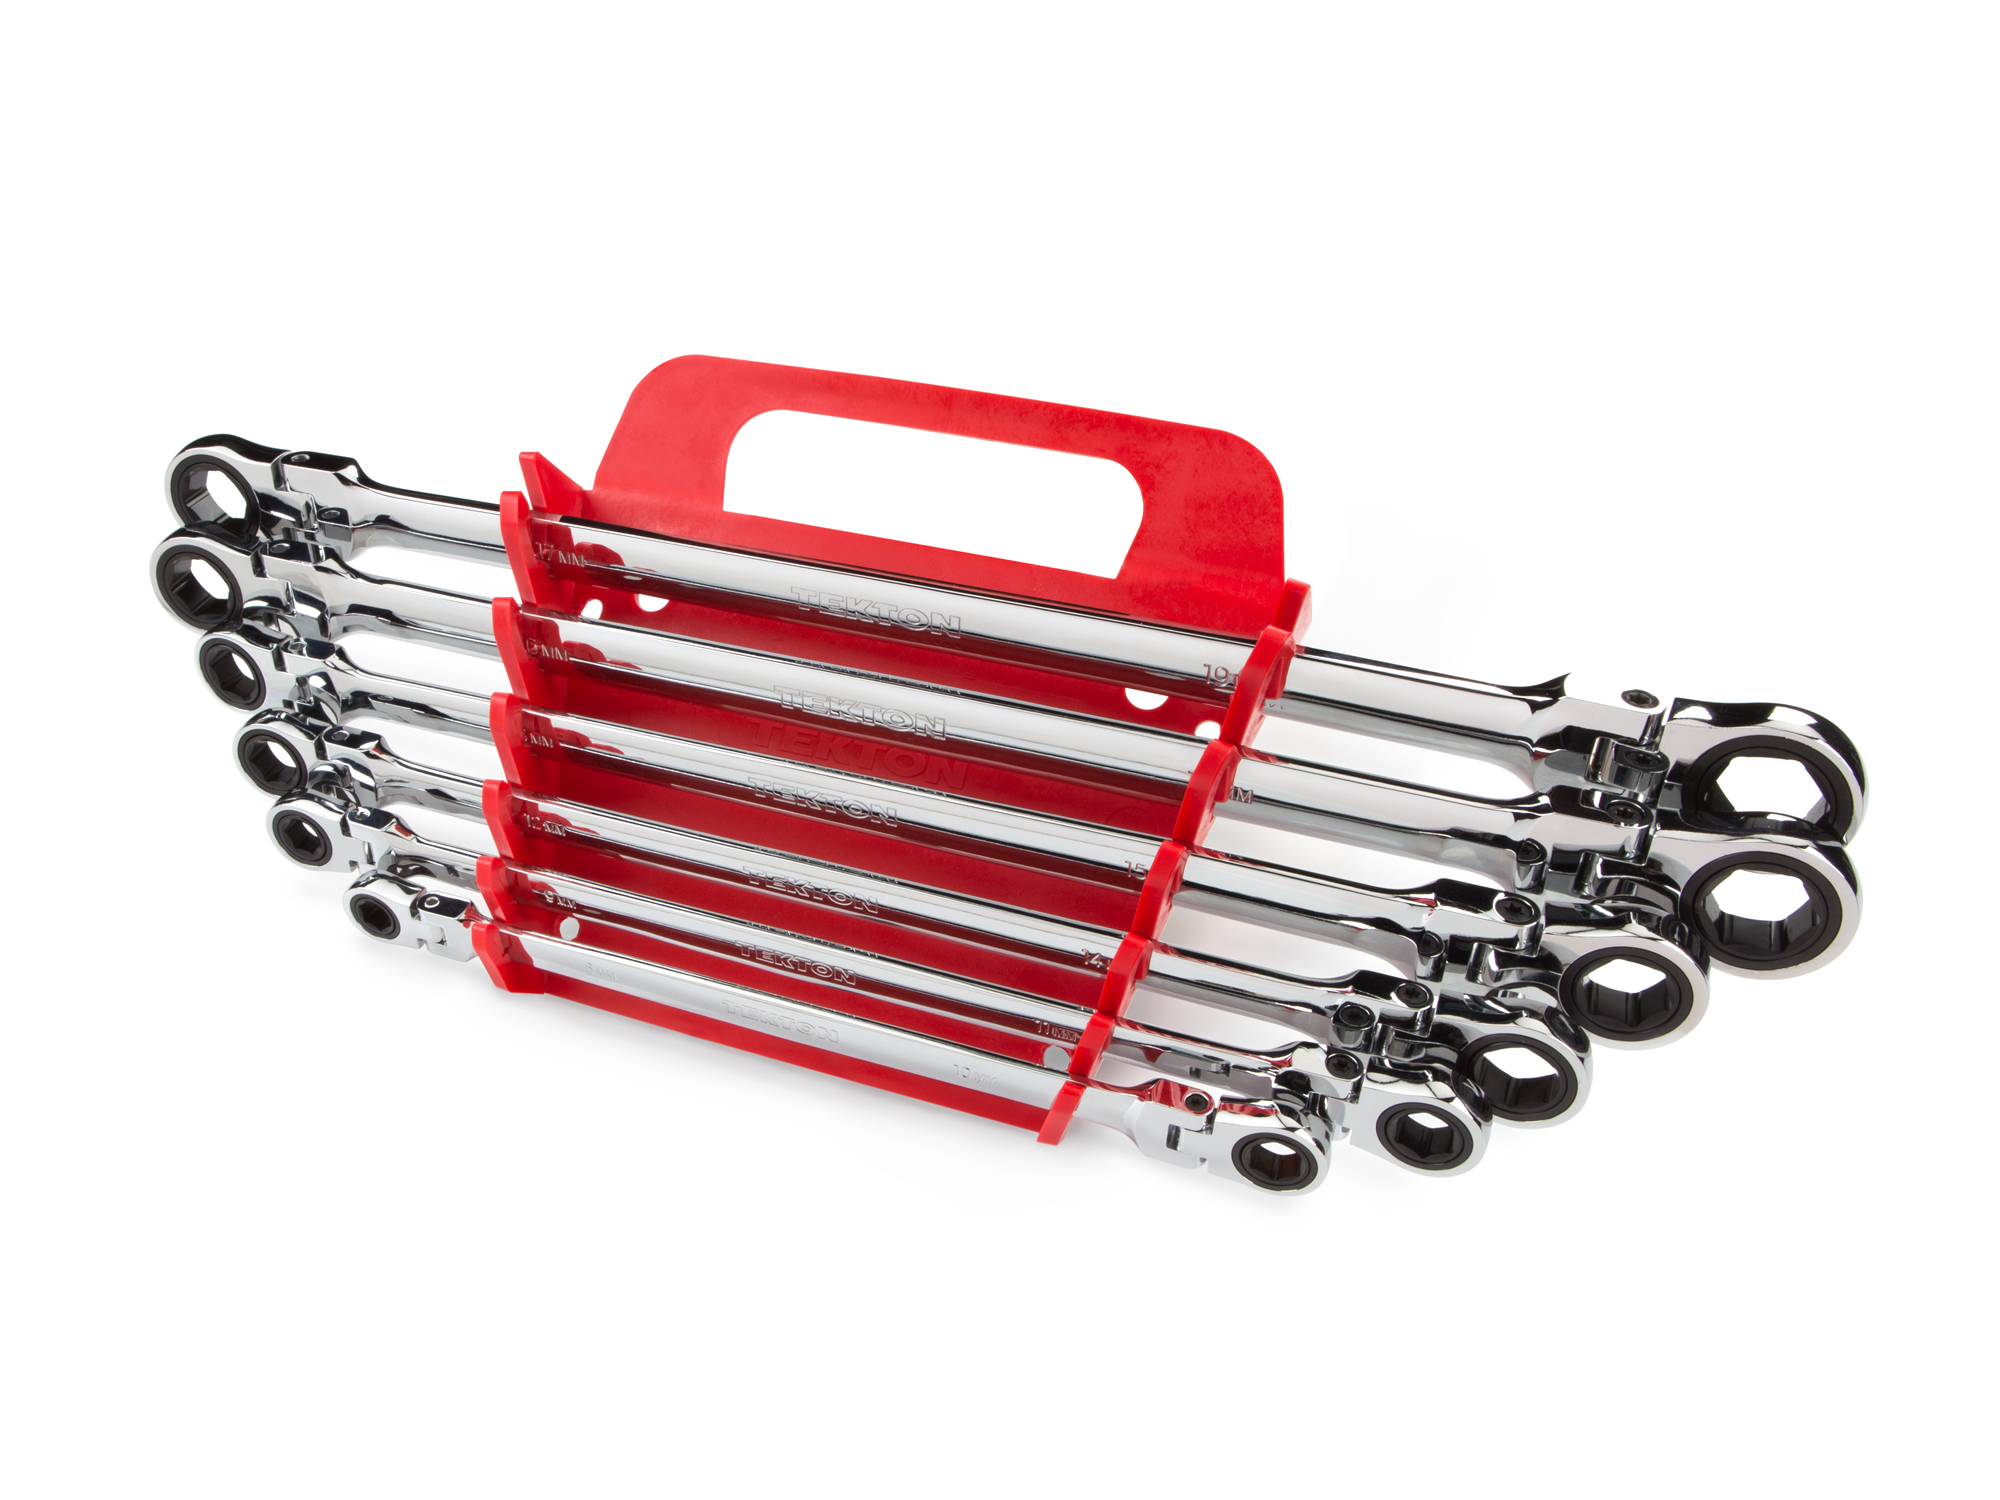 TEKTON Long Flex Ratcheting Box End Wrench Set, 6-Piece (8-19 mm) - Keeper  | WRN77164 - Walmart.com